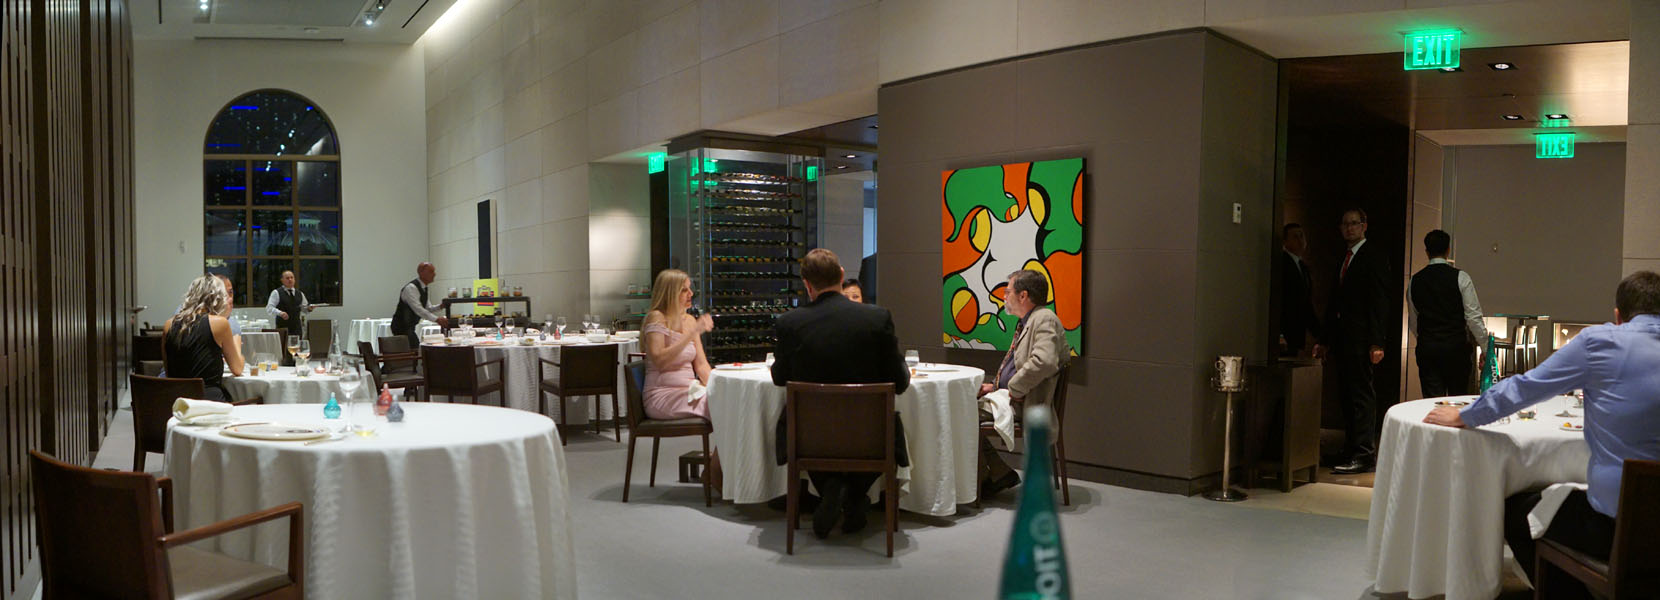 Restaurant Guy Savoy Dining Room